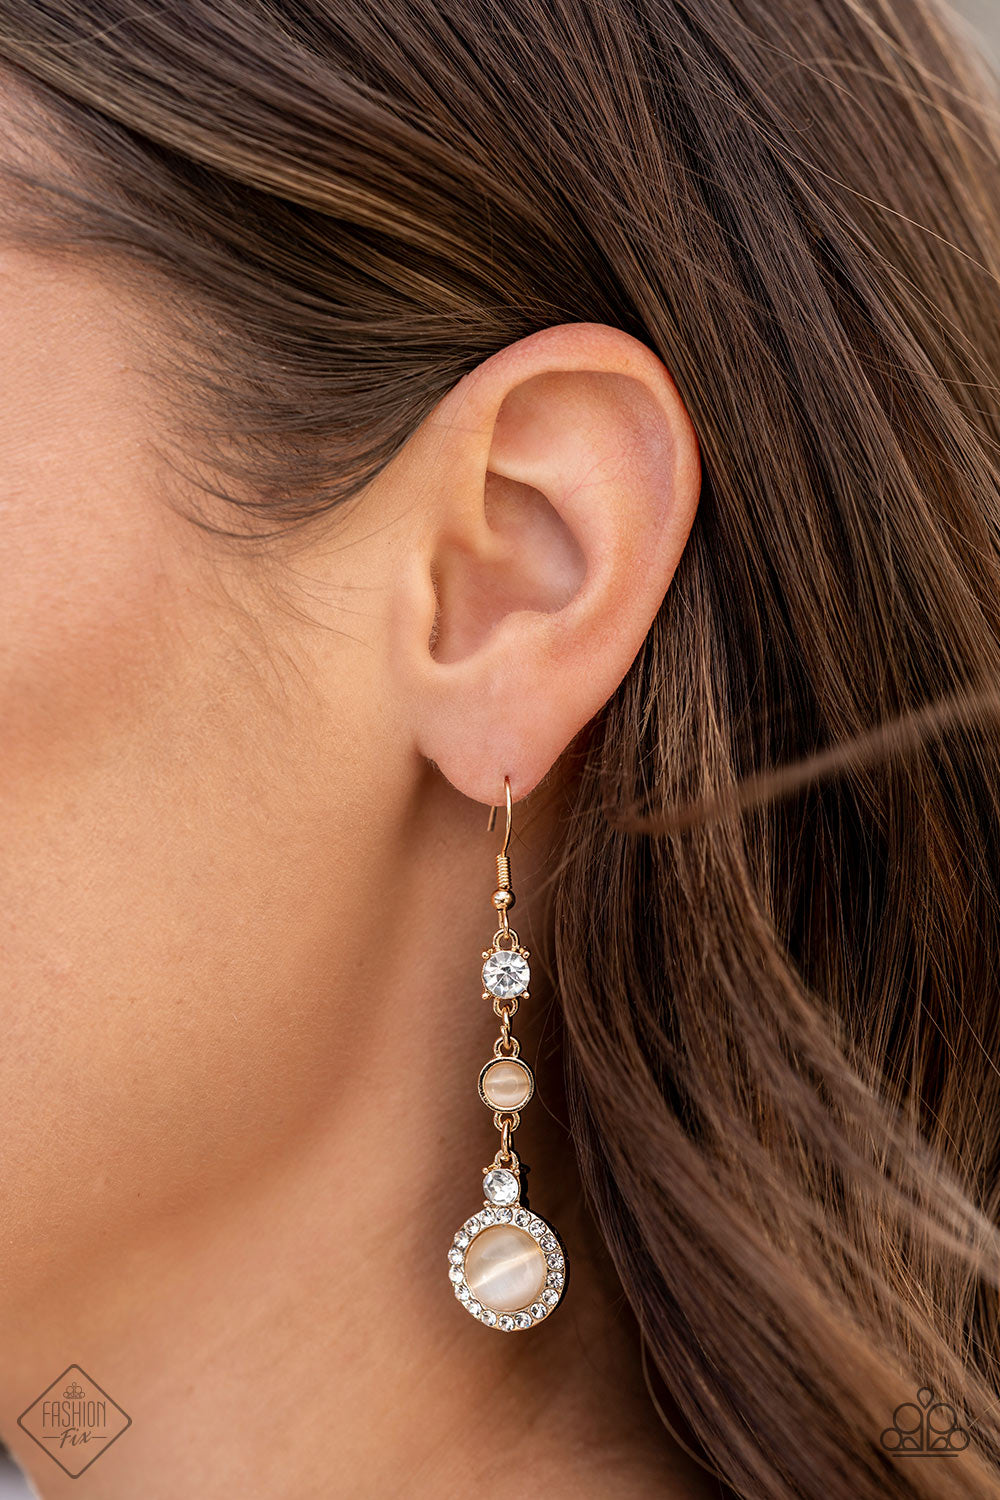 Paparazzi Epic Elegance - Gold Fashion Fix Earrings - A Finishing Touch Jewelry